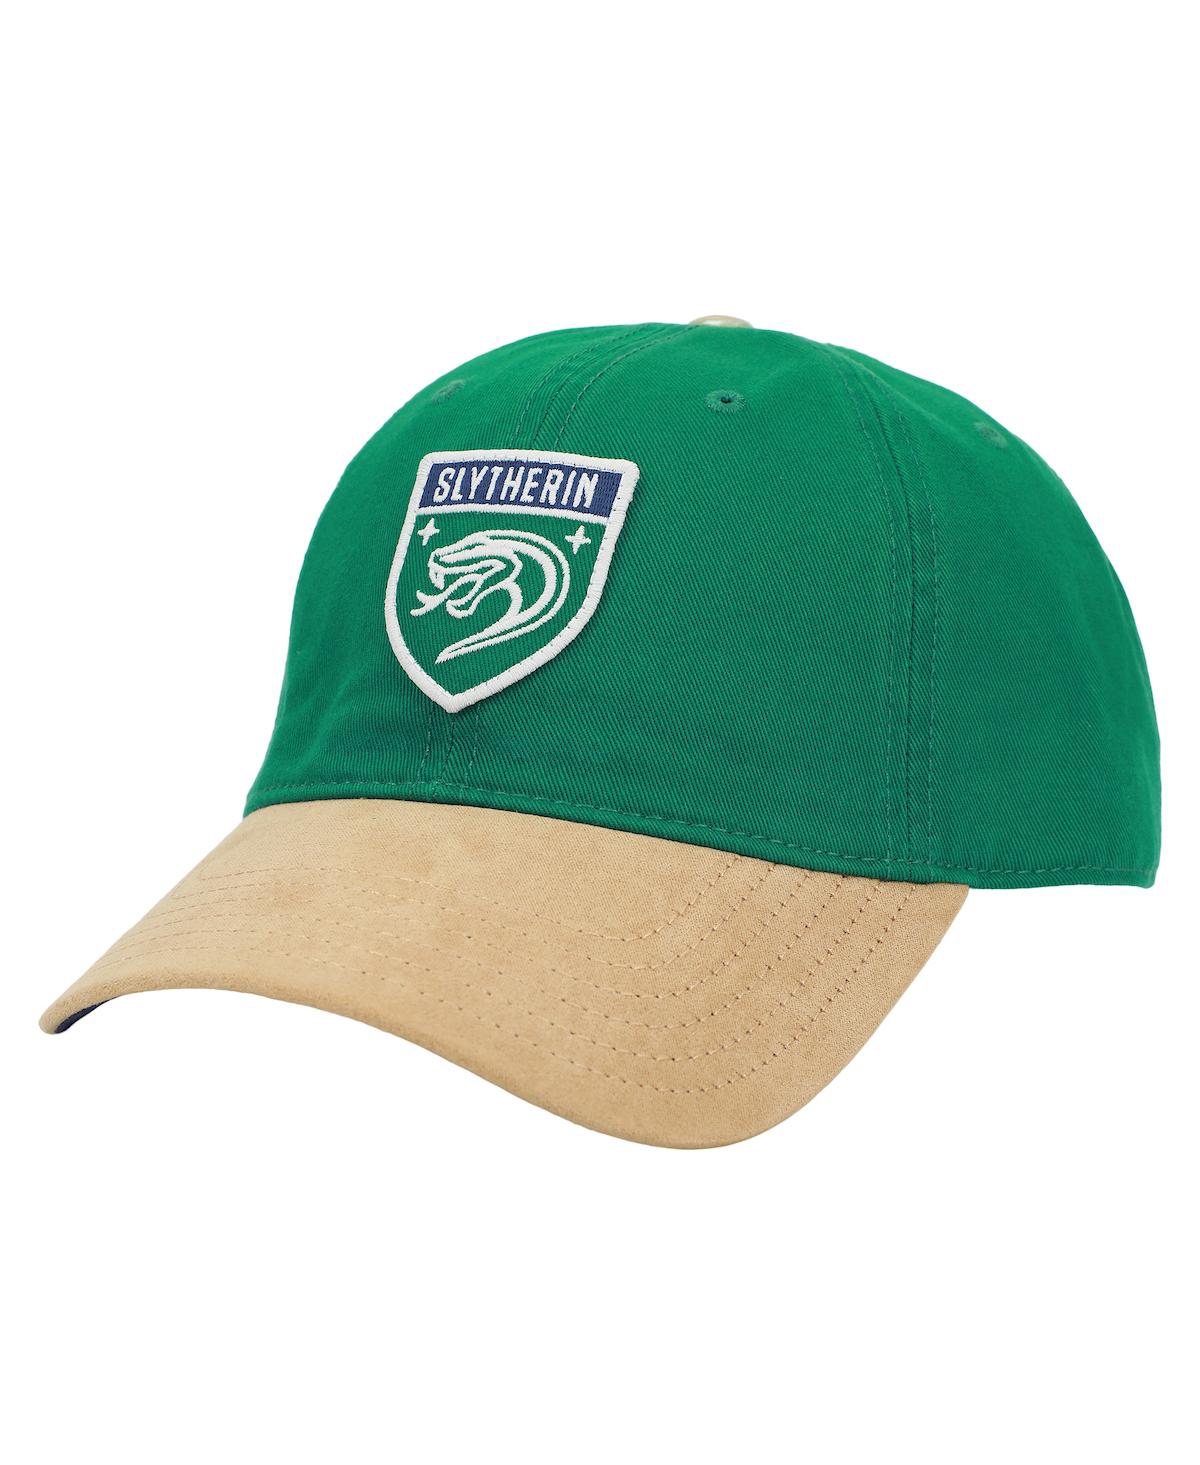 Men's Slytherin Crest Green Dad Hat - Multicolored